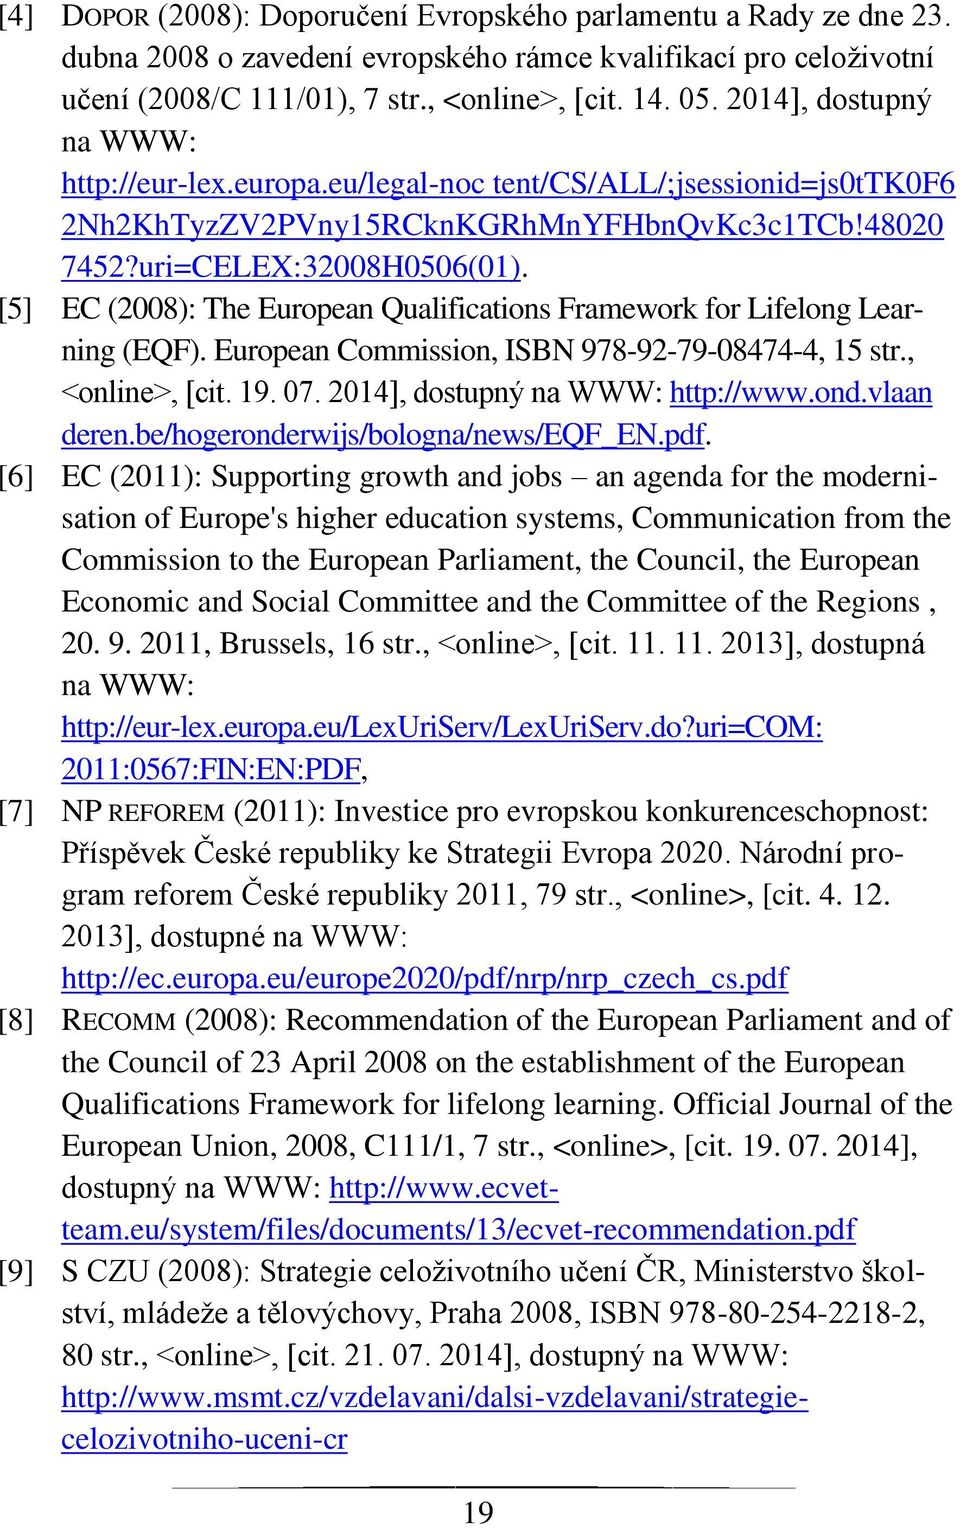 [5] EC (2008): The European Qualifications Framework for Lifelong Learning (EQF). European Commission, ISBN 978-92-79-08474-4, 15 str., <online>, [cit. 19. 07. 2014], dostupný na WWW: http://www.ond.